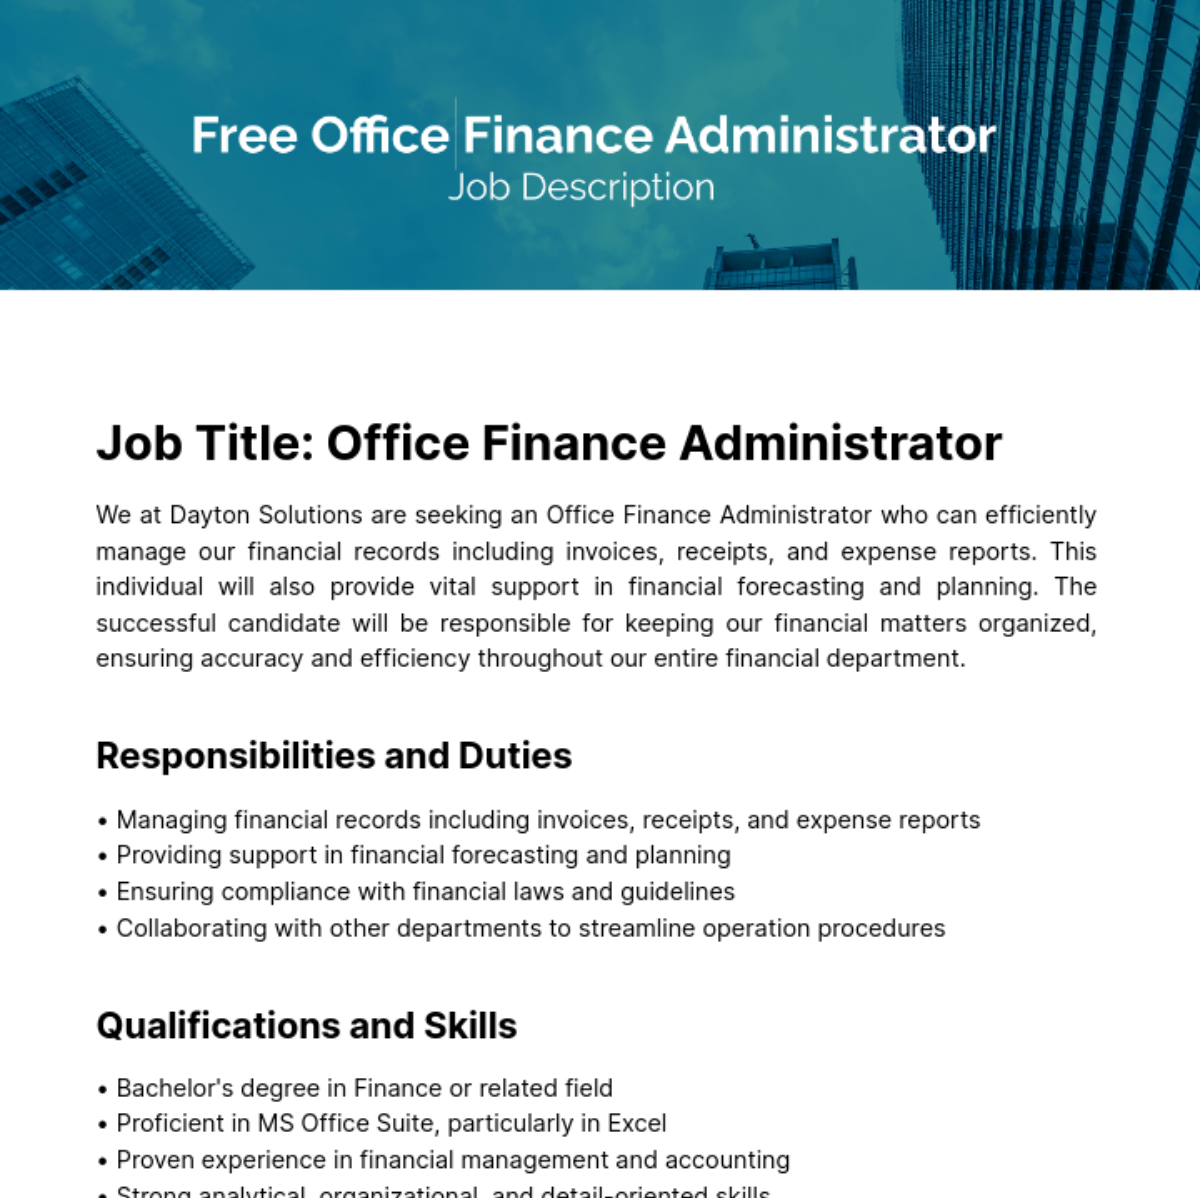 Free Office Finance Administrator Job Description Template